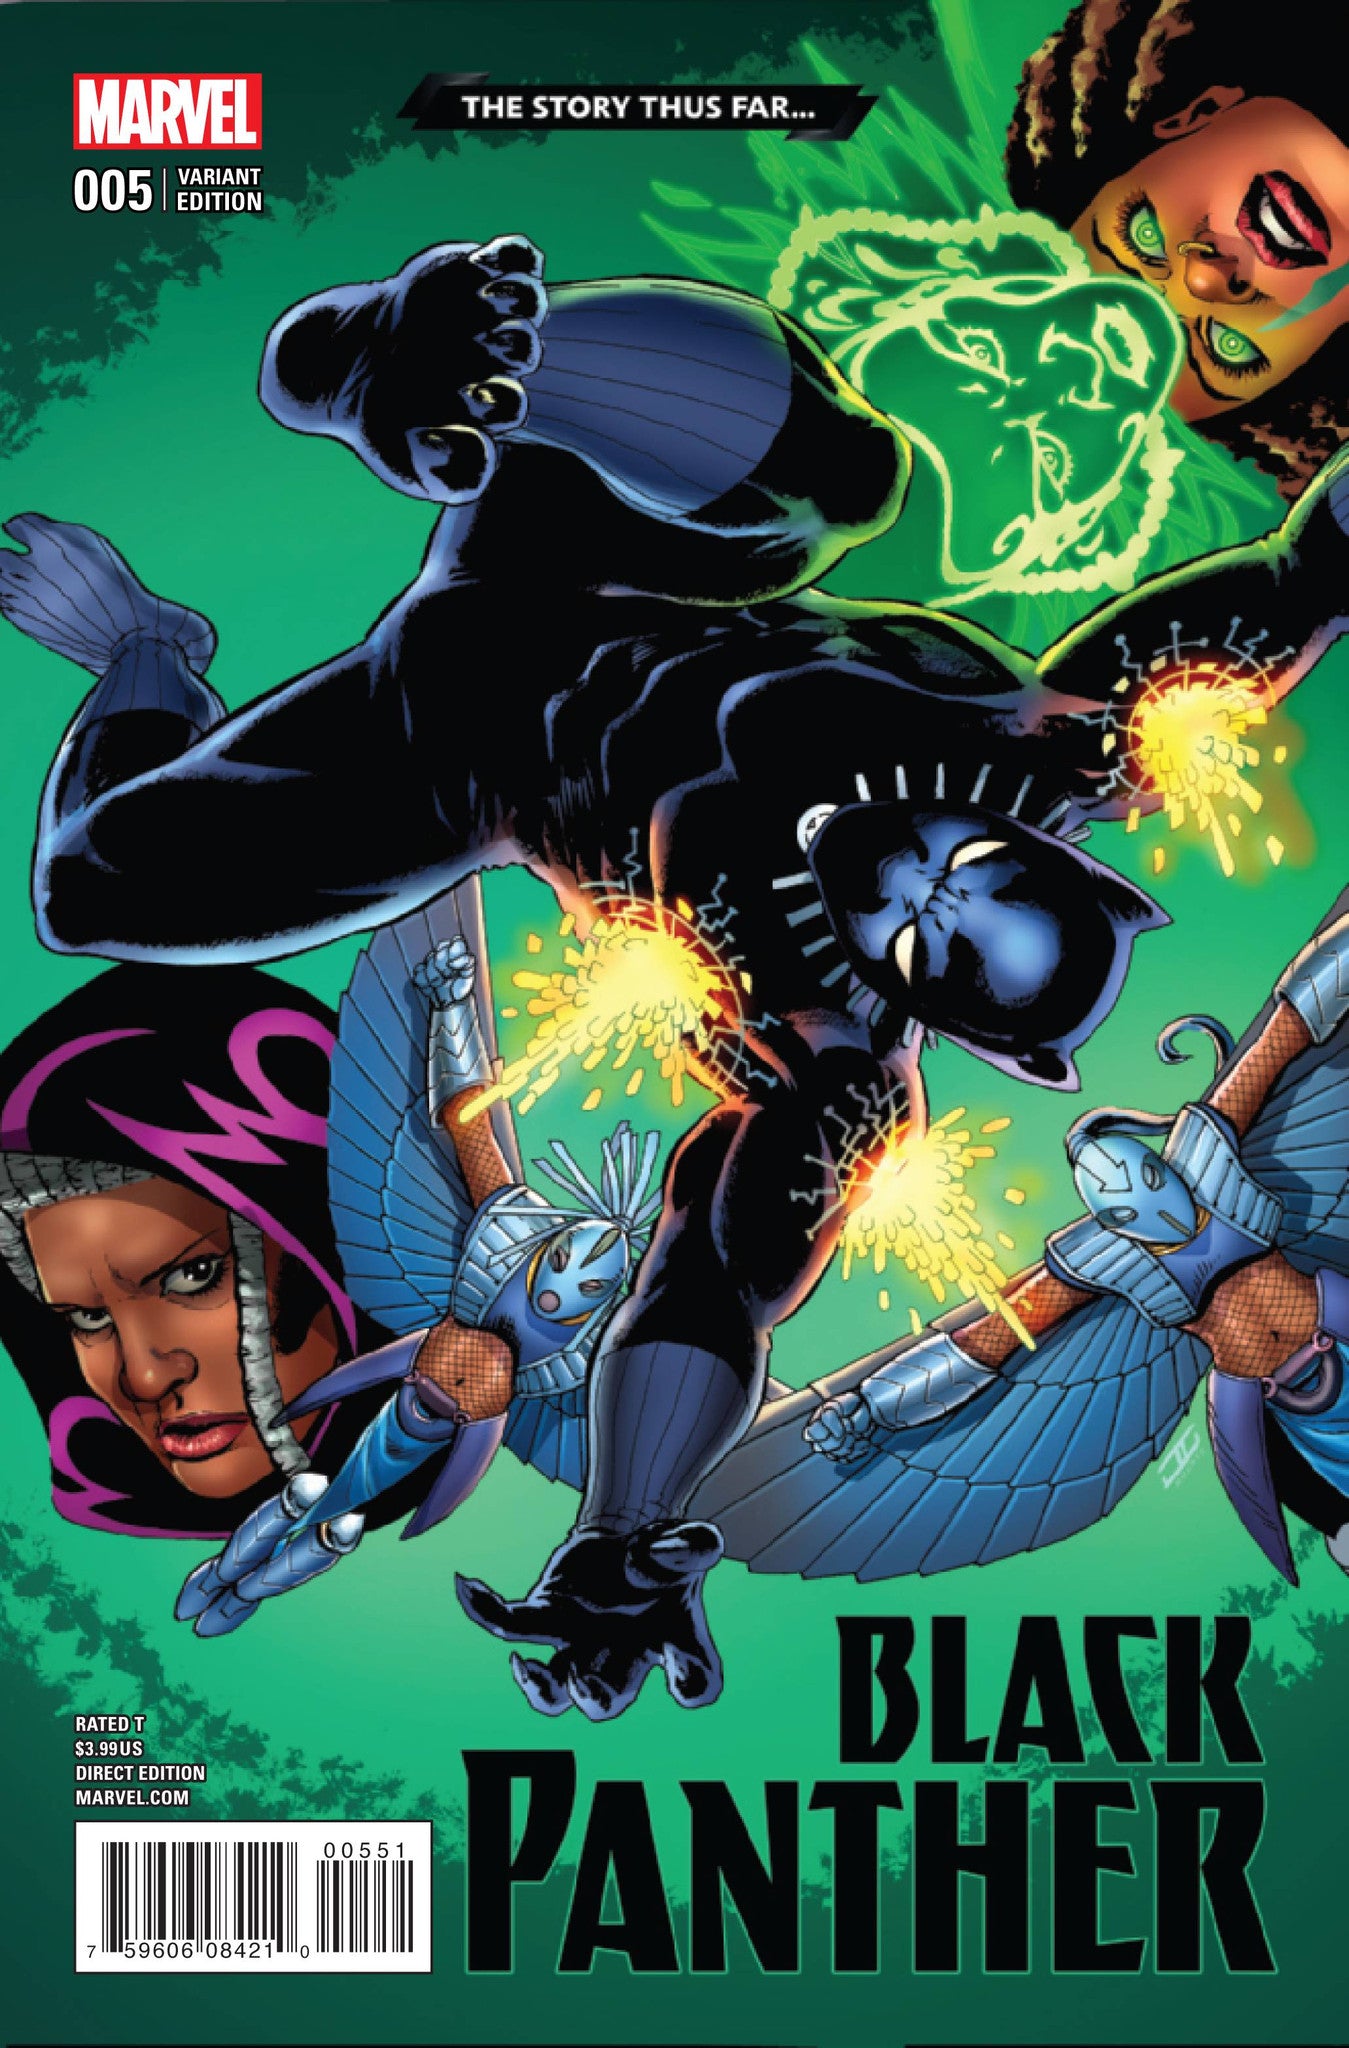 BLACK PANTHER #5 CASSADAY STORY THUS FAR VAR COVER